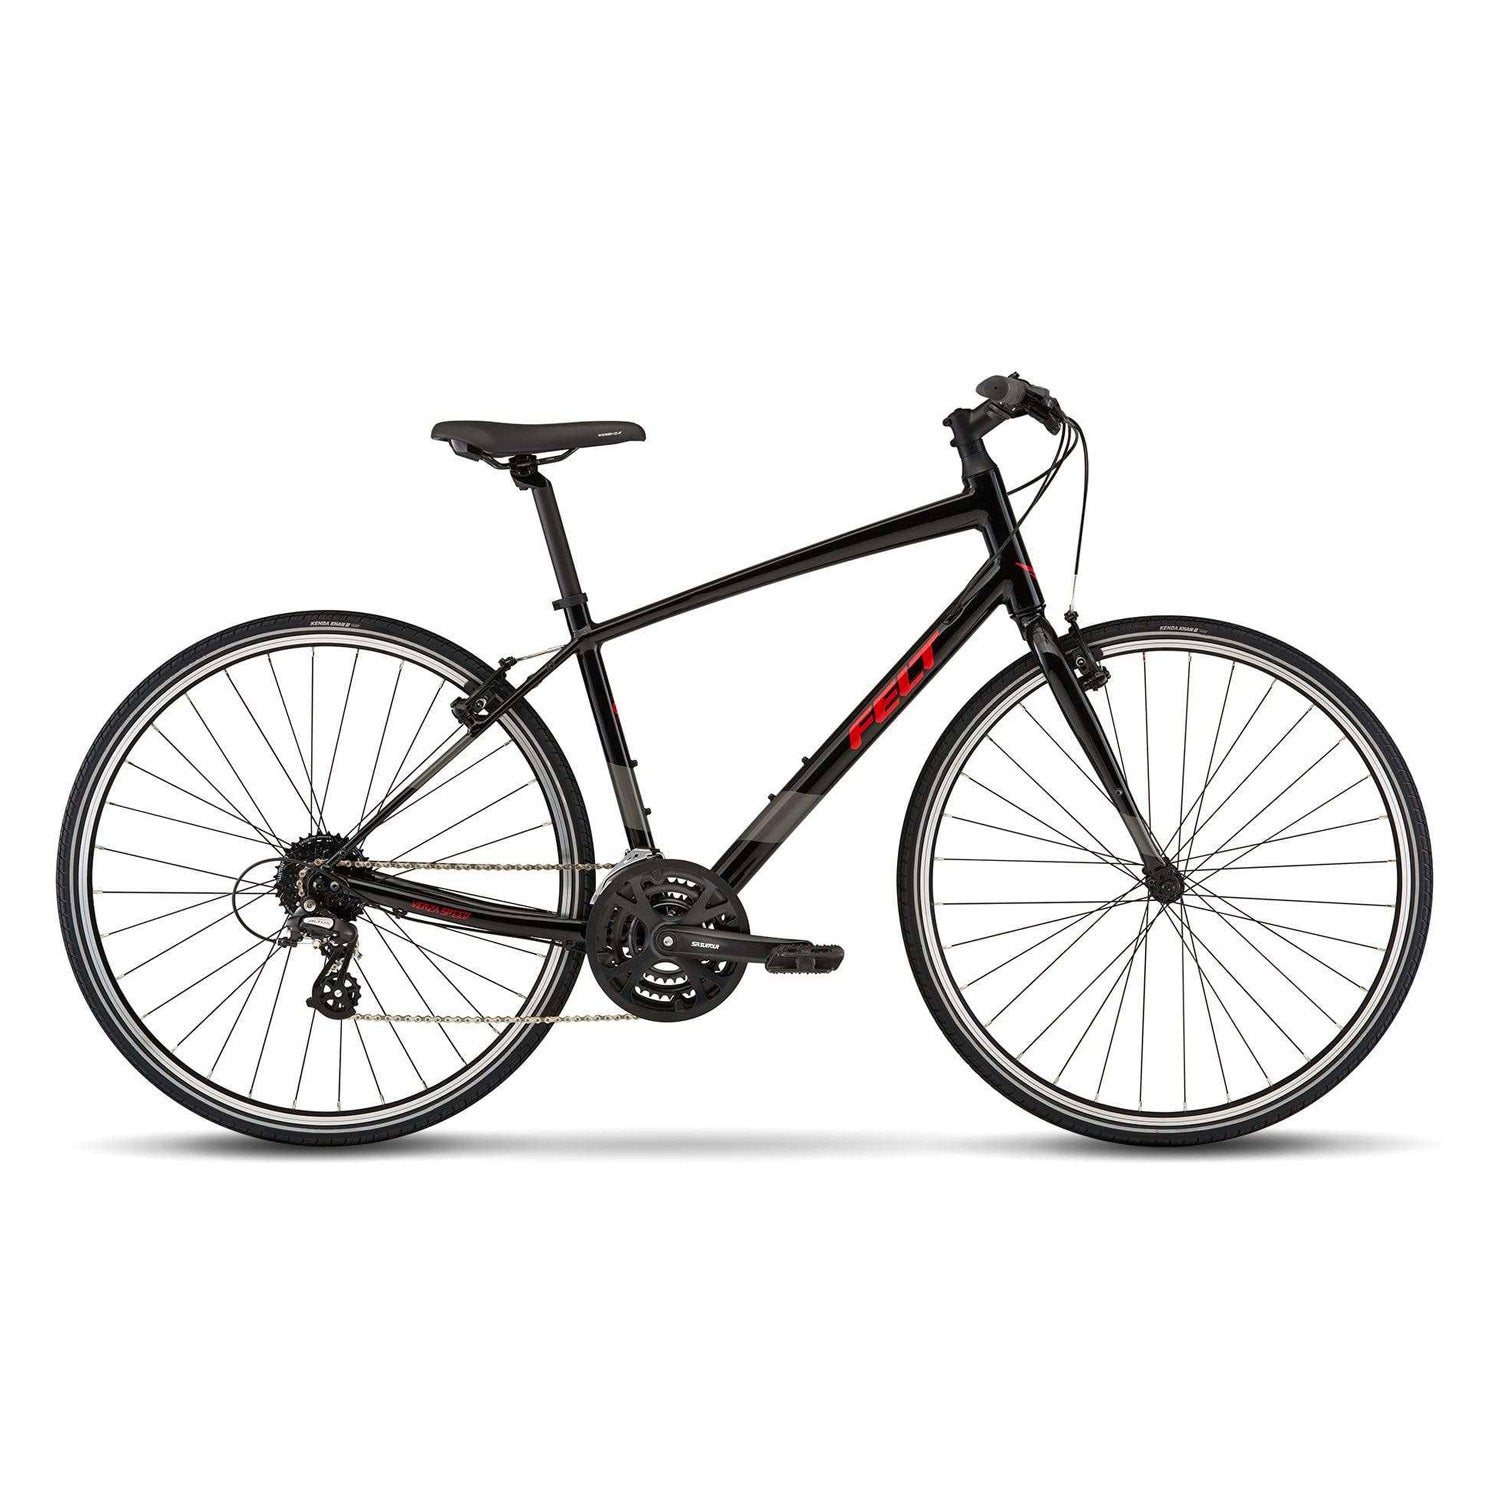 Felt Verza Speed 50 Fitness Road Bike - Black and Reflective Red, Bixby Bicycles, Ok, bidxbybicycles.com